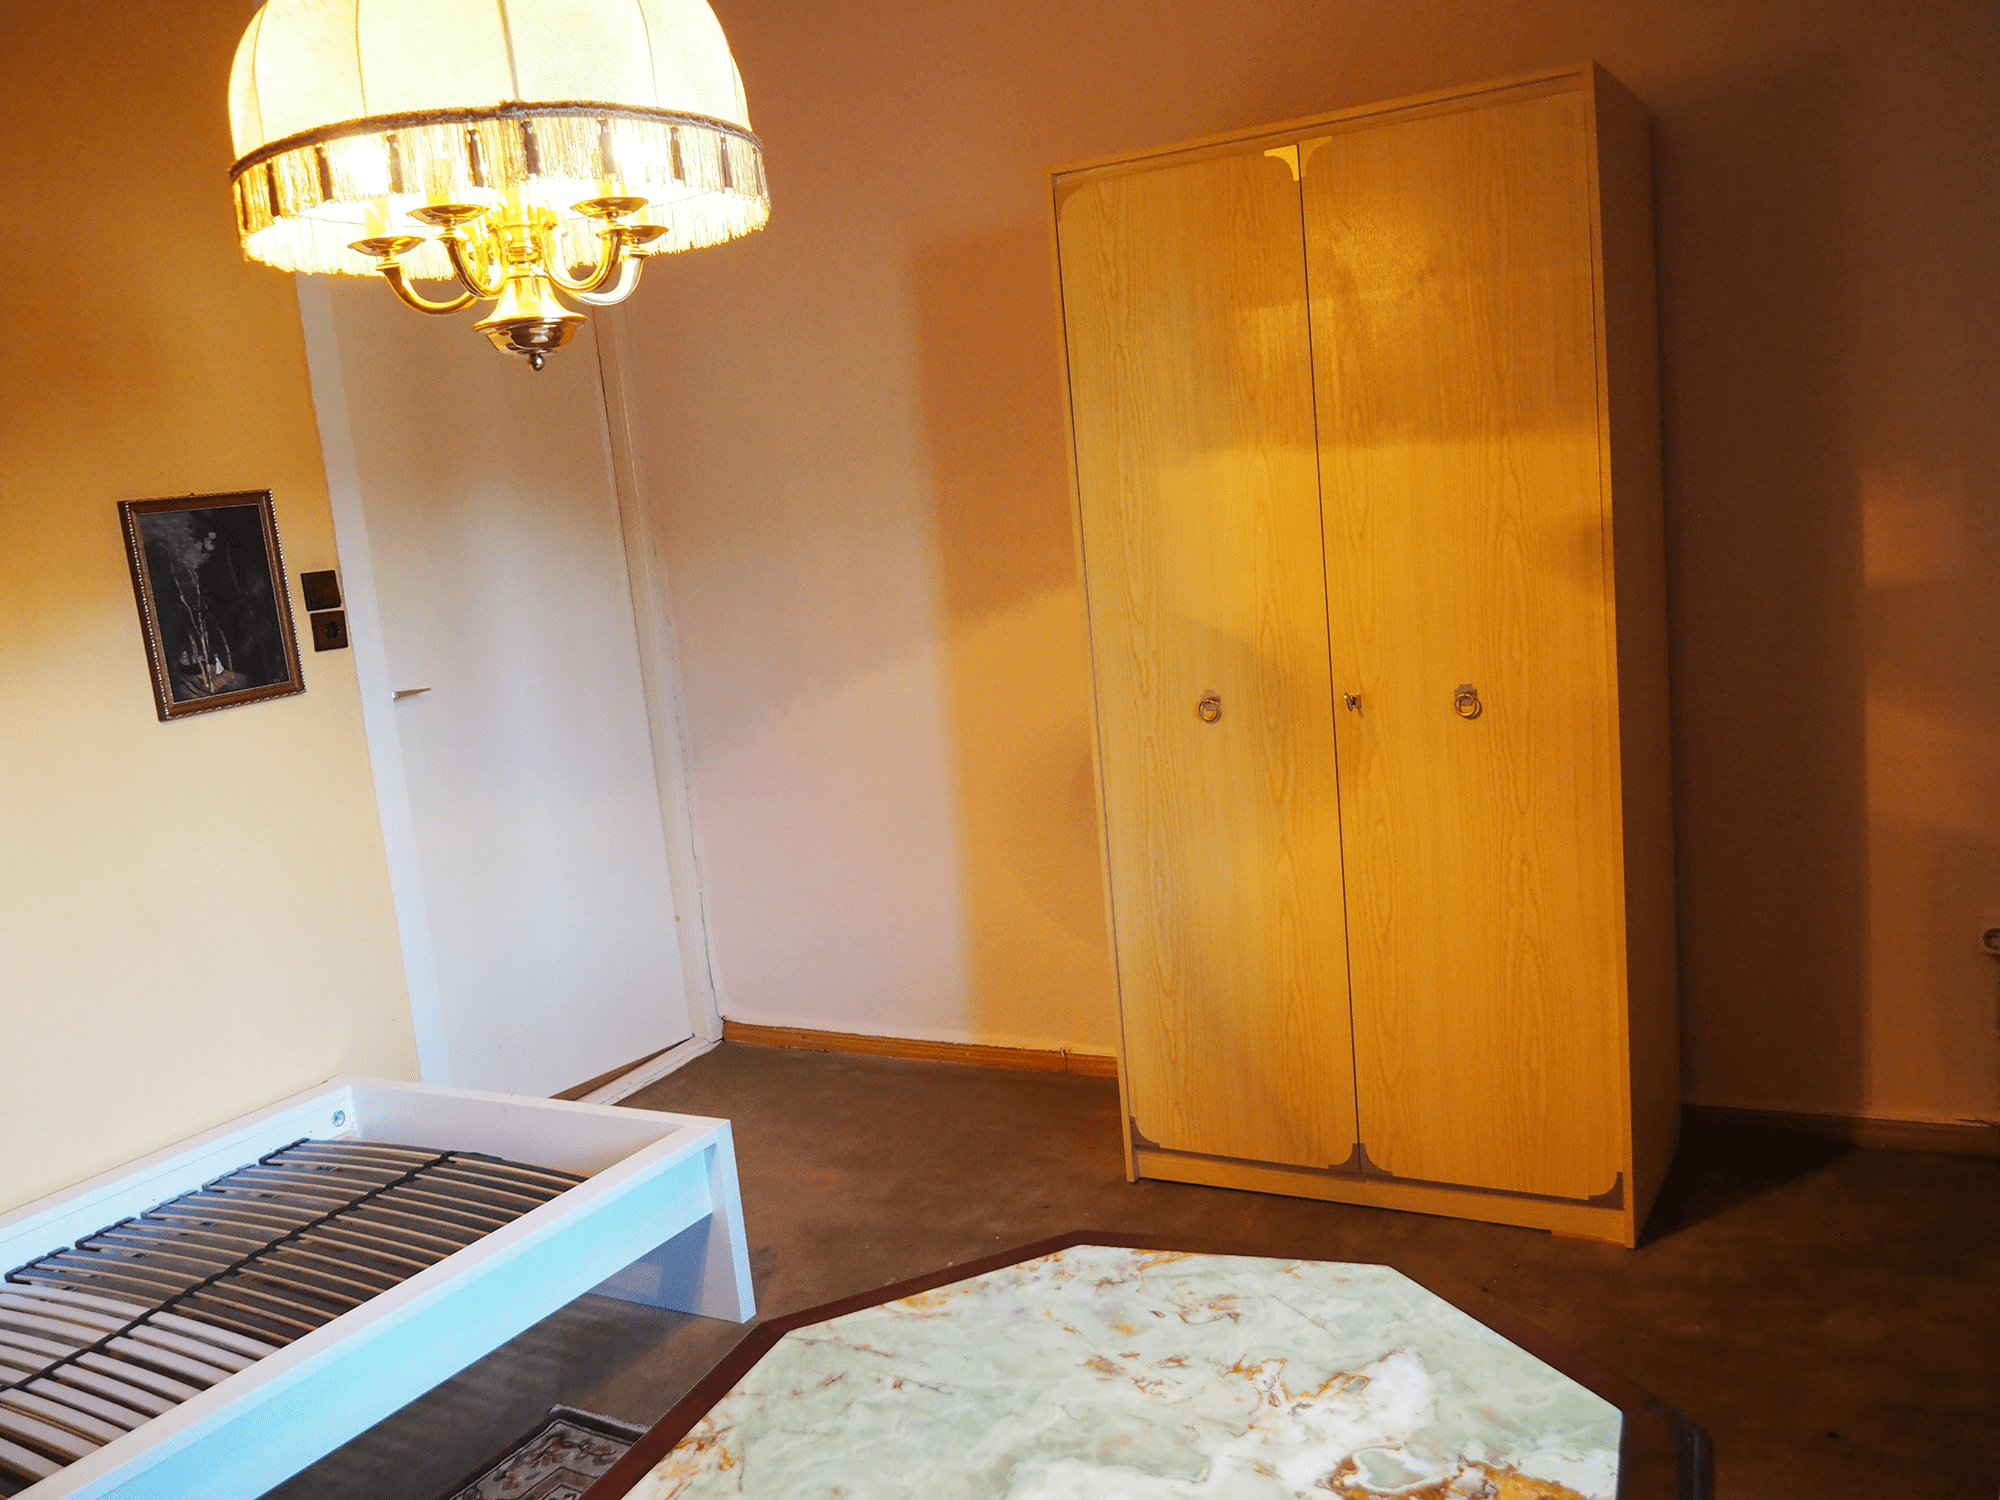 Rooms in Herzogenaurach